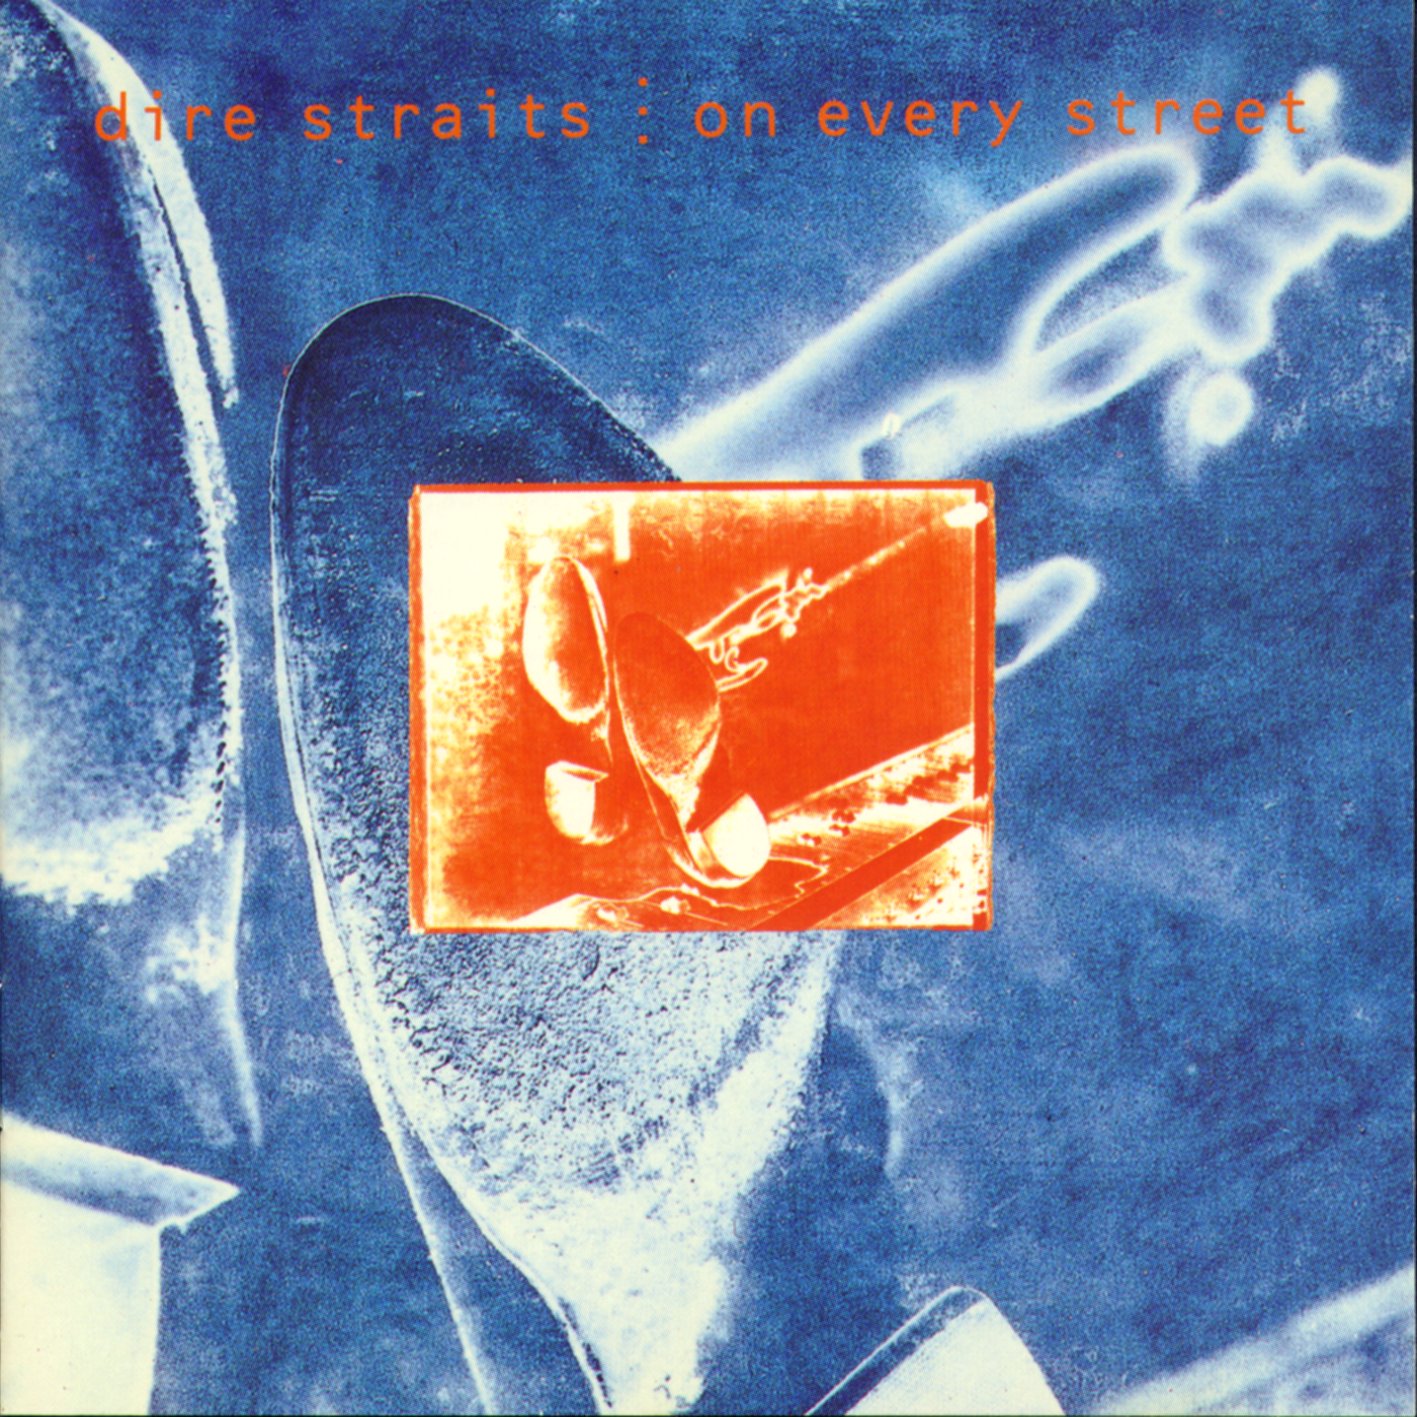 Busco un CD de Dire Straits Cover2ON+EVERY+(1)